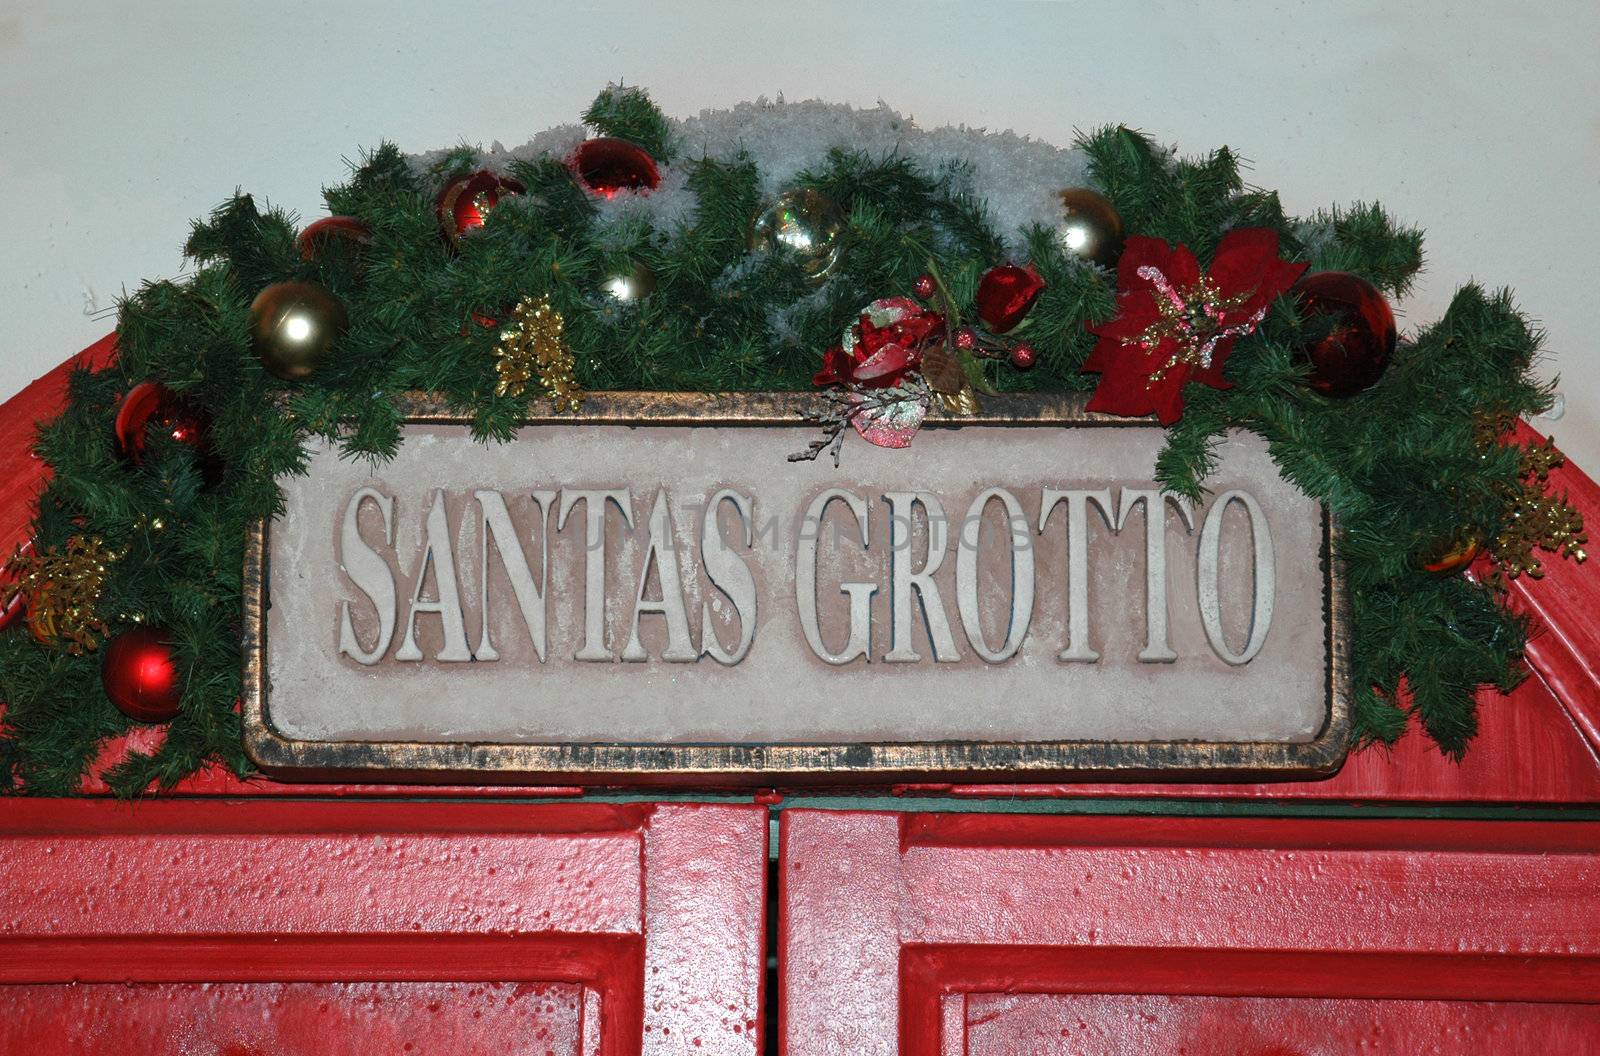 The doors to Santa's Grotto